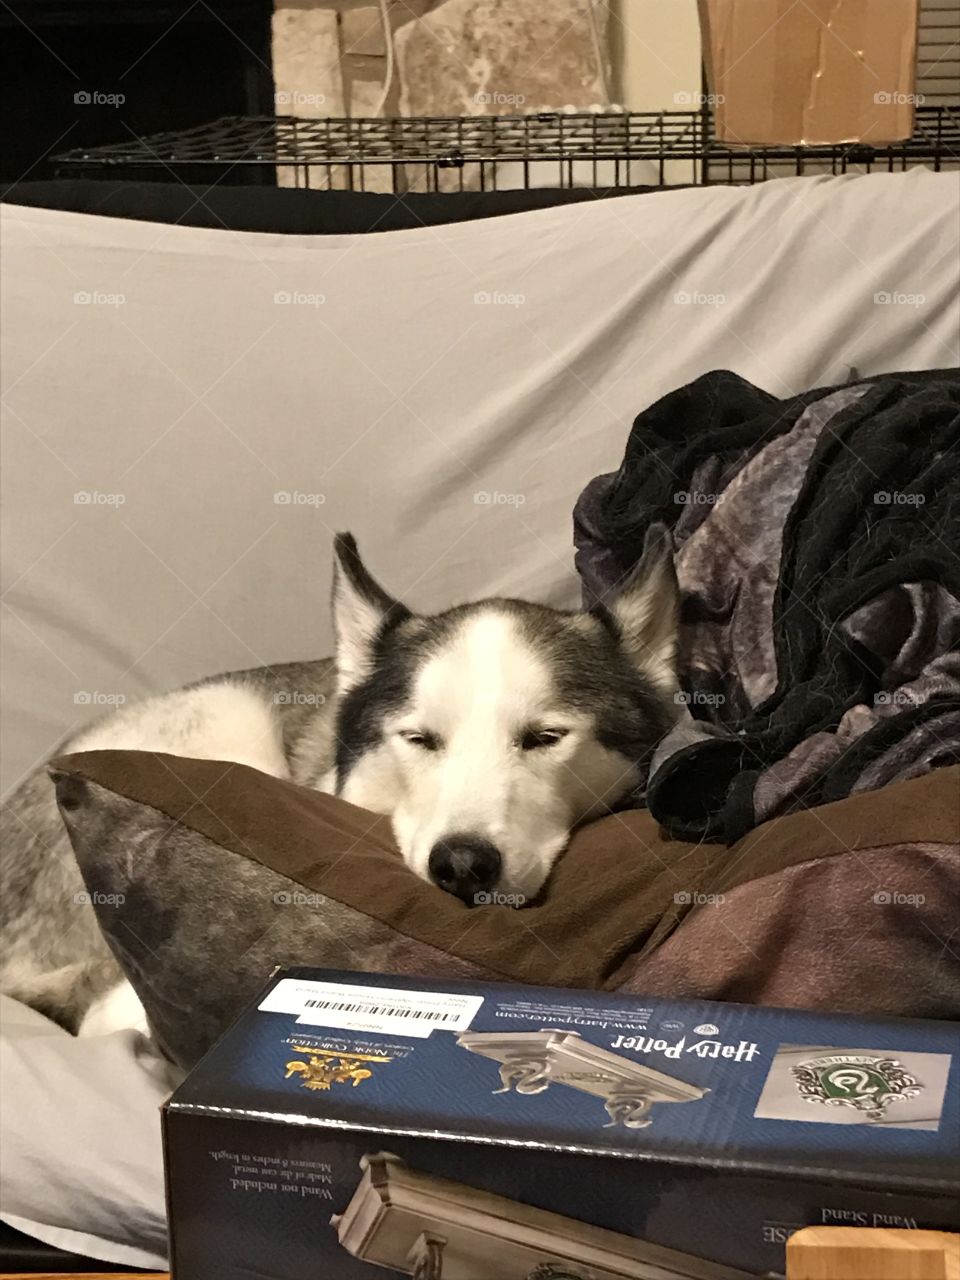 Orion enjoying a nap